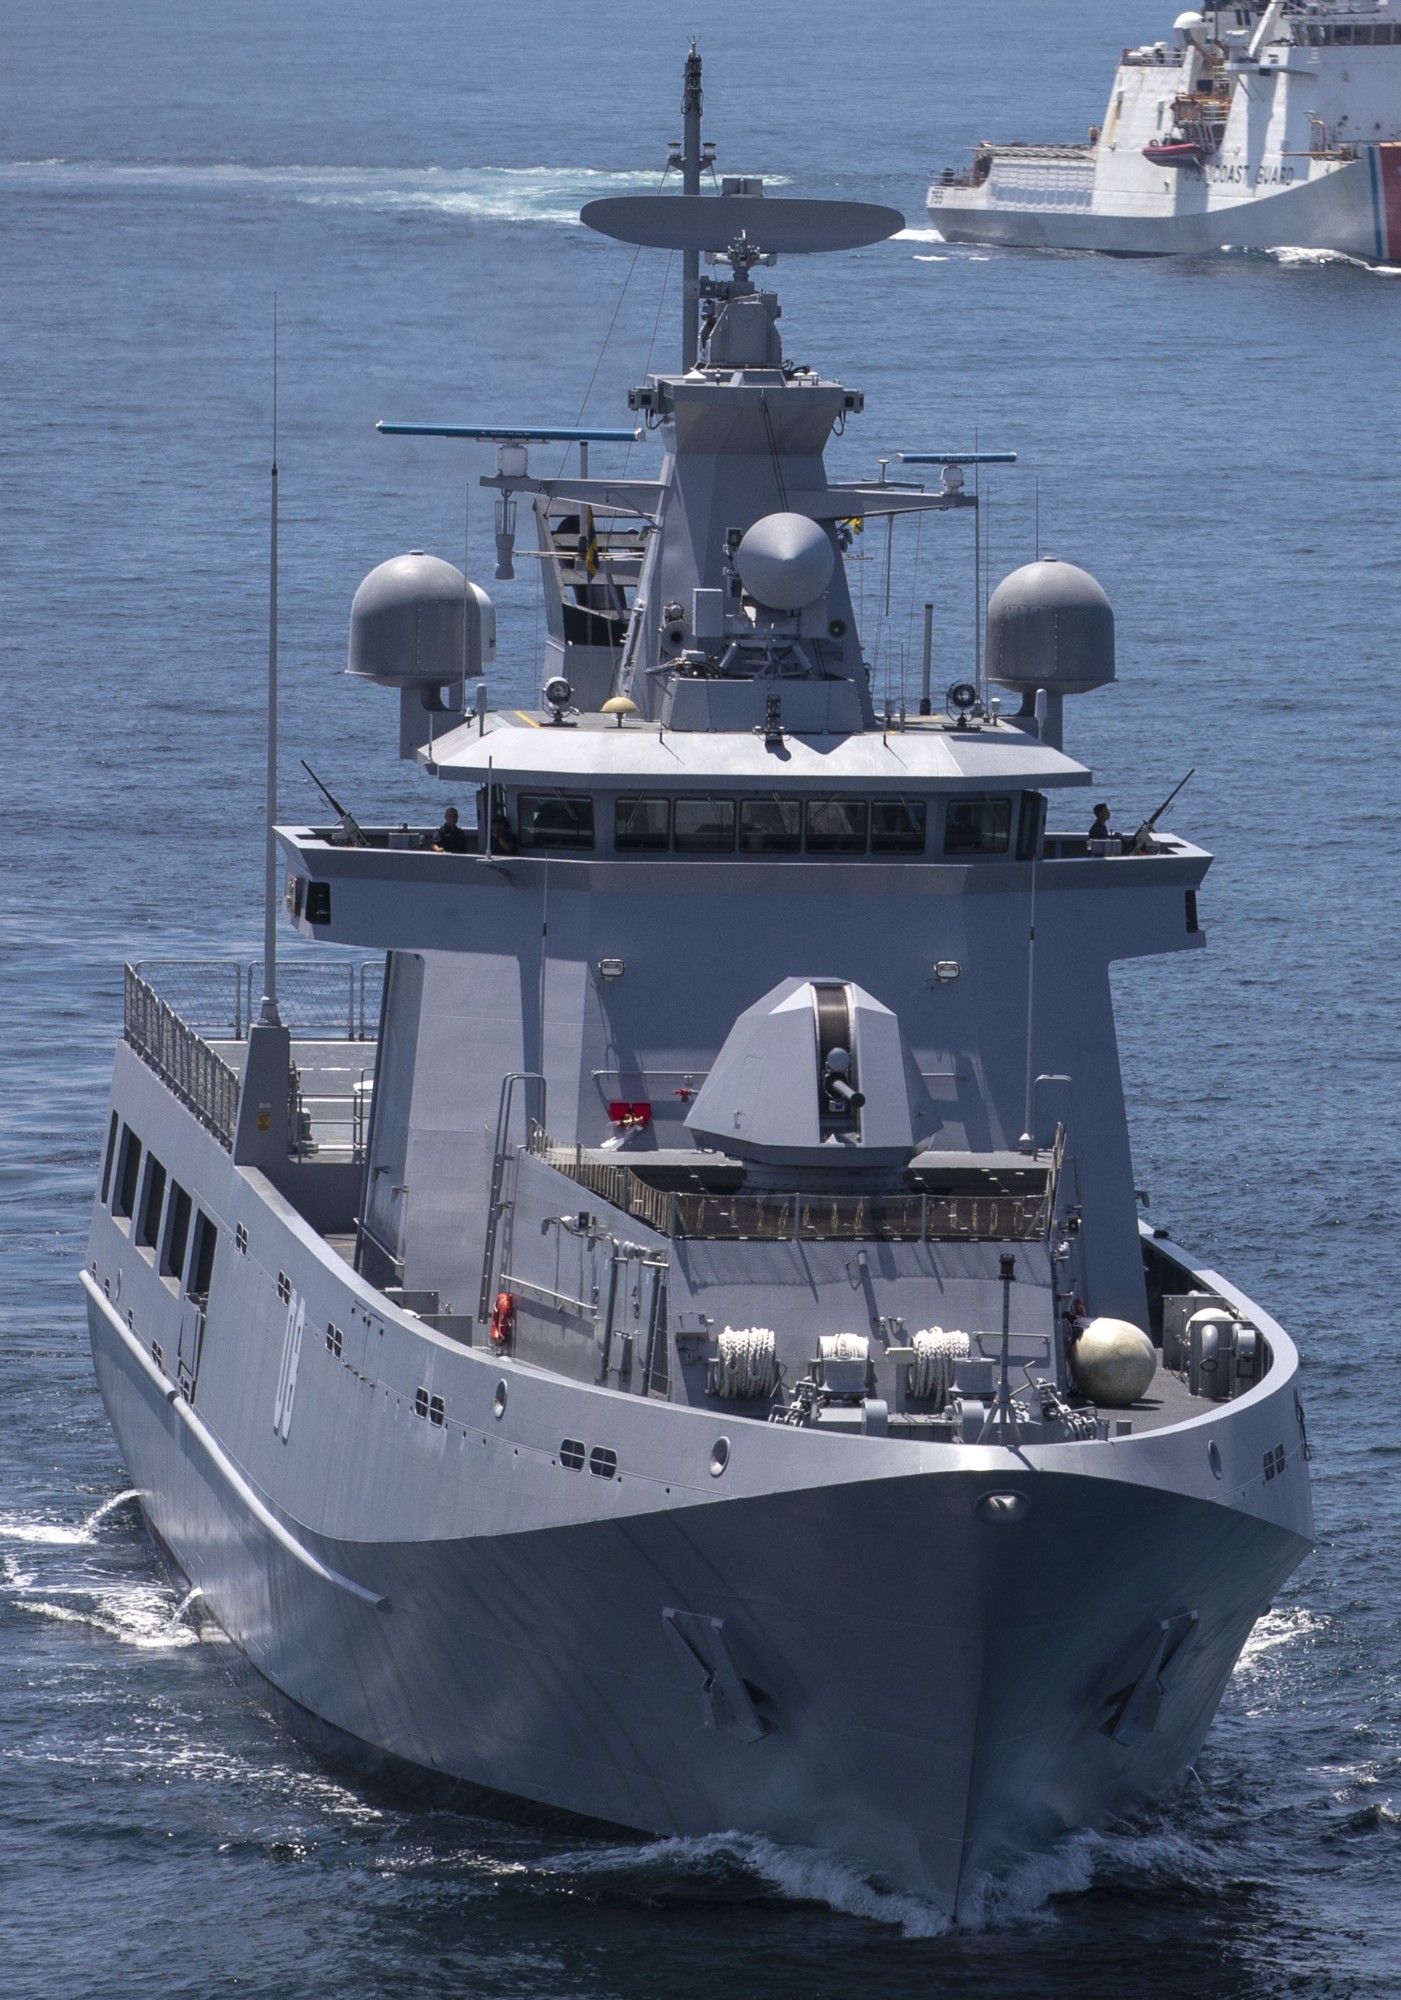 opv 08 kdb darulaman offshore patrol vessel darussalem class royal brunei navy 11